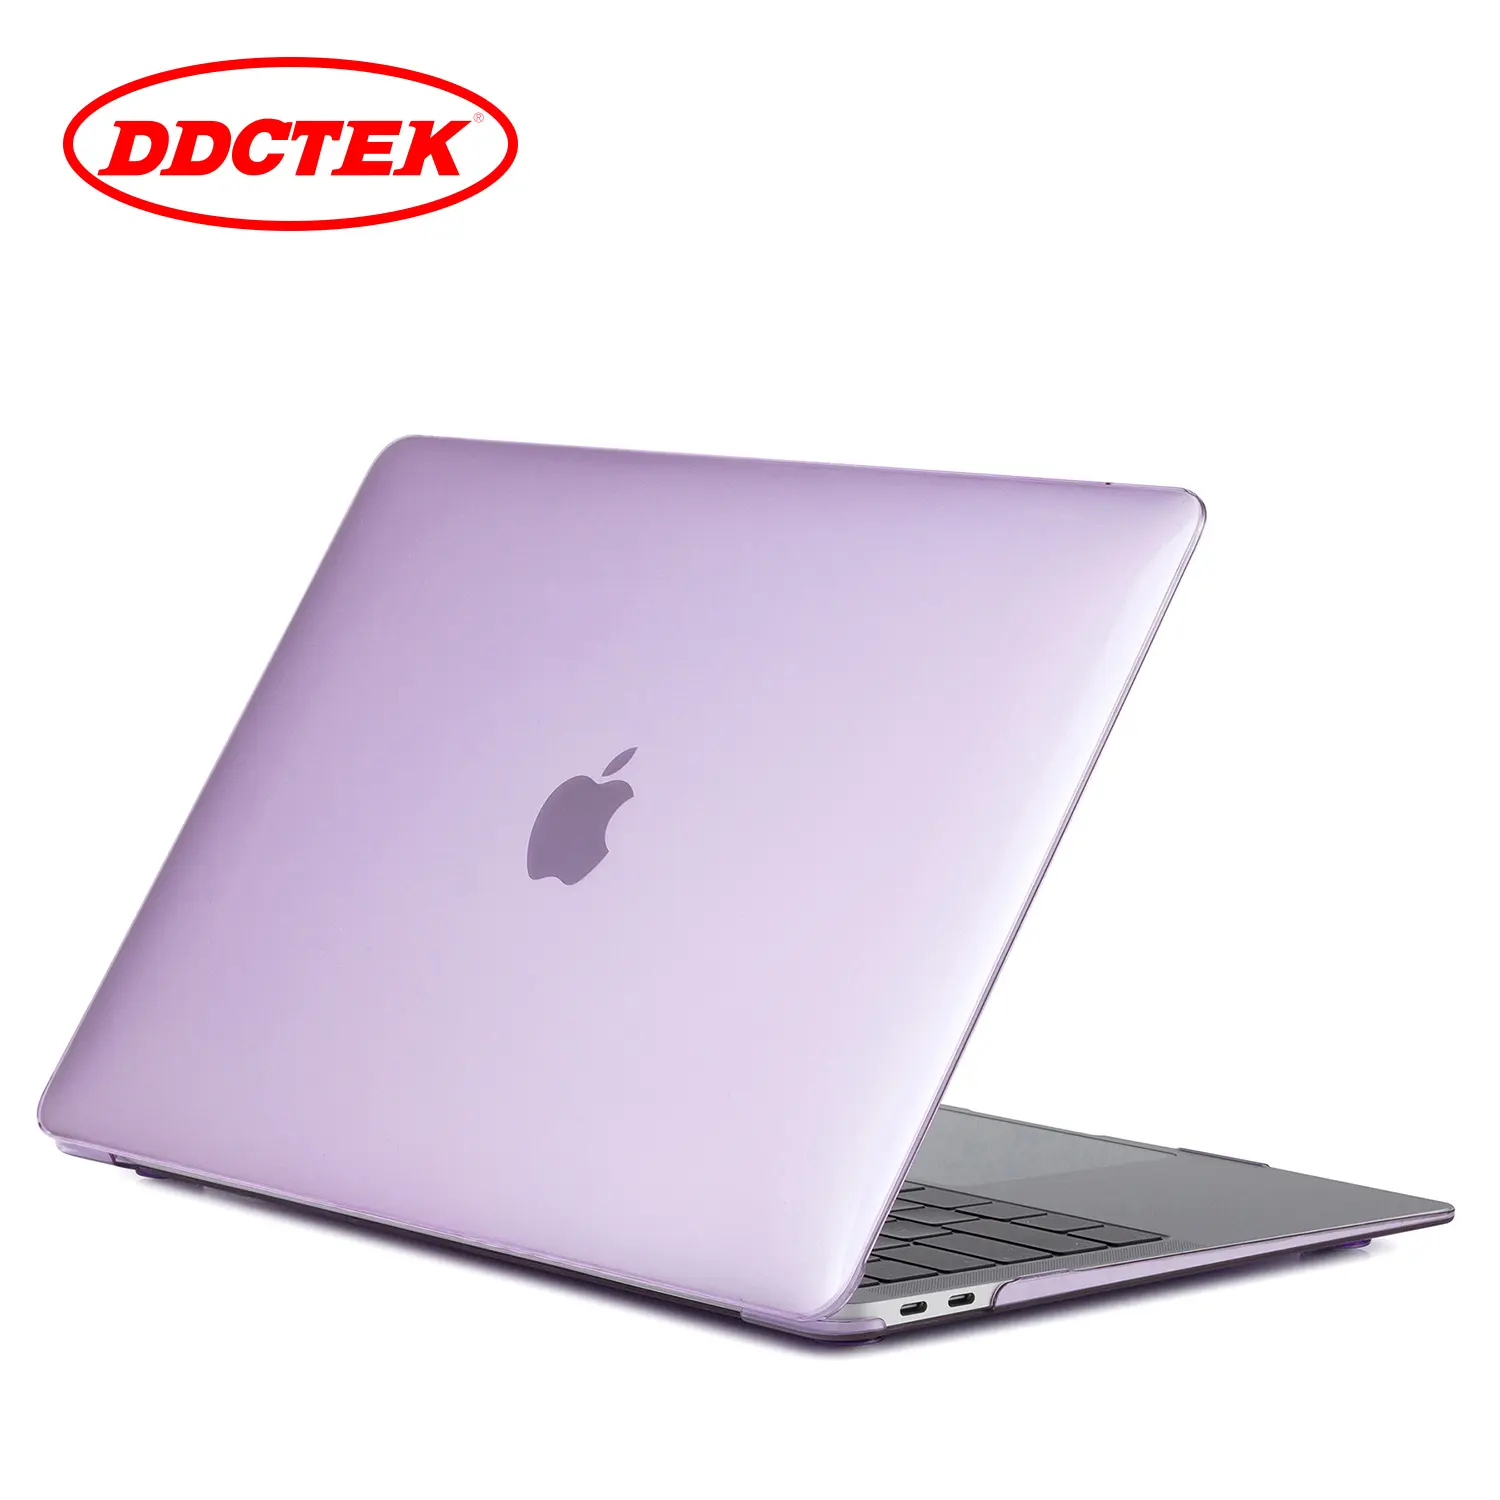 Sarung Laptop Apple, Ransel Laptop Unisex, Ransel Laptop PC Kristal Tahan Air untuk Apple Mac